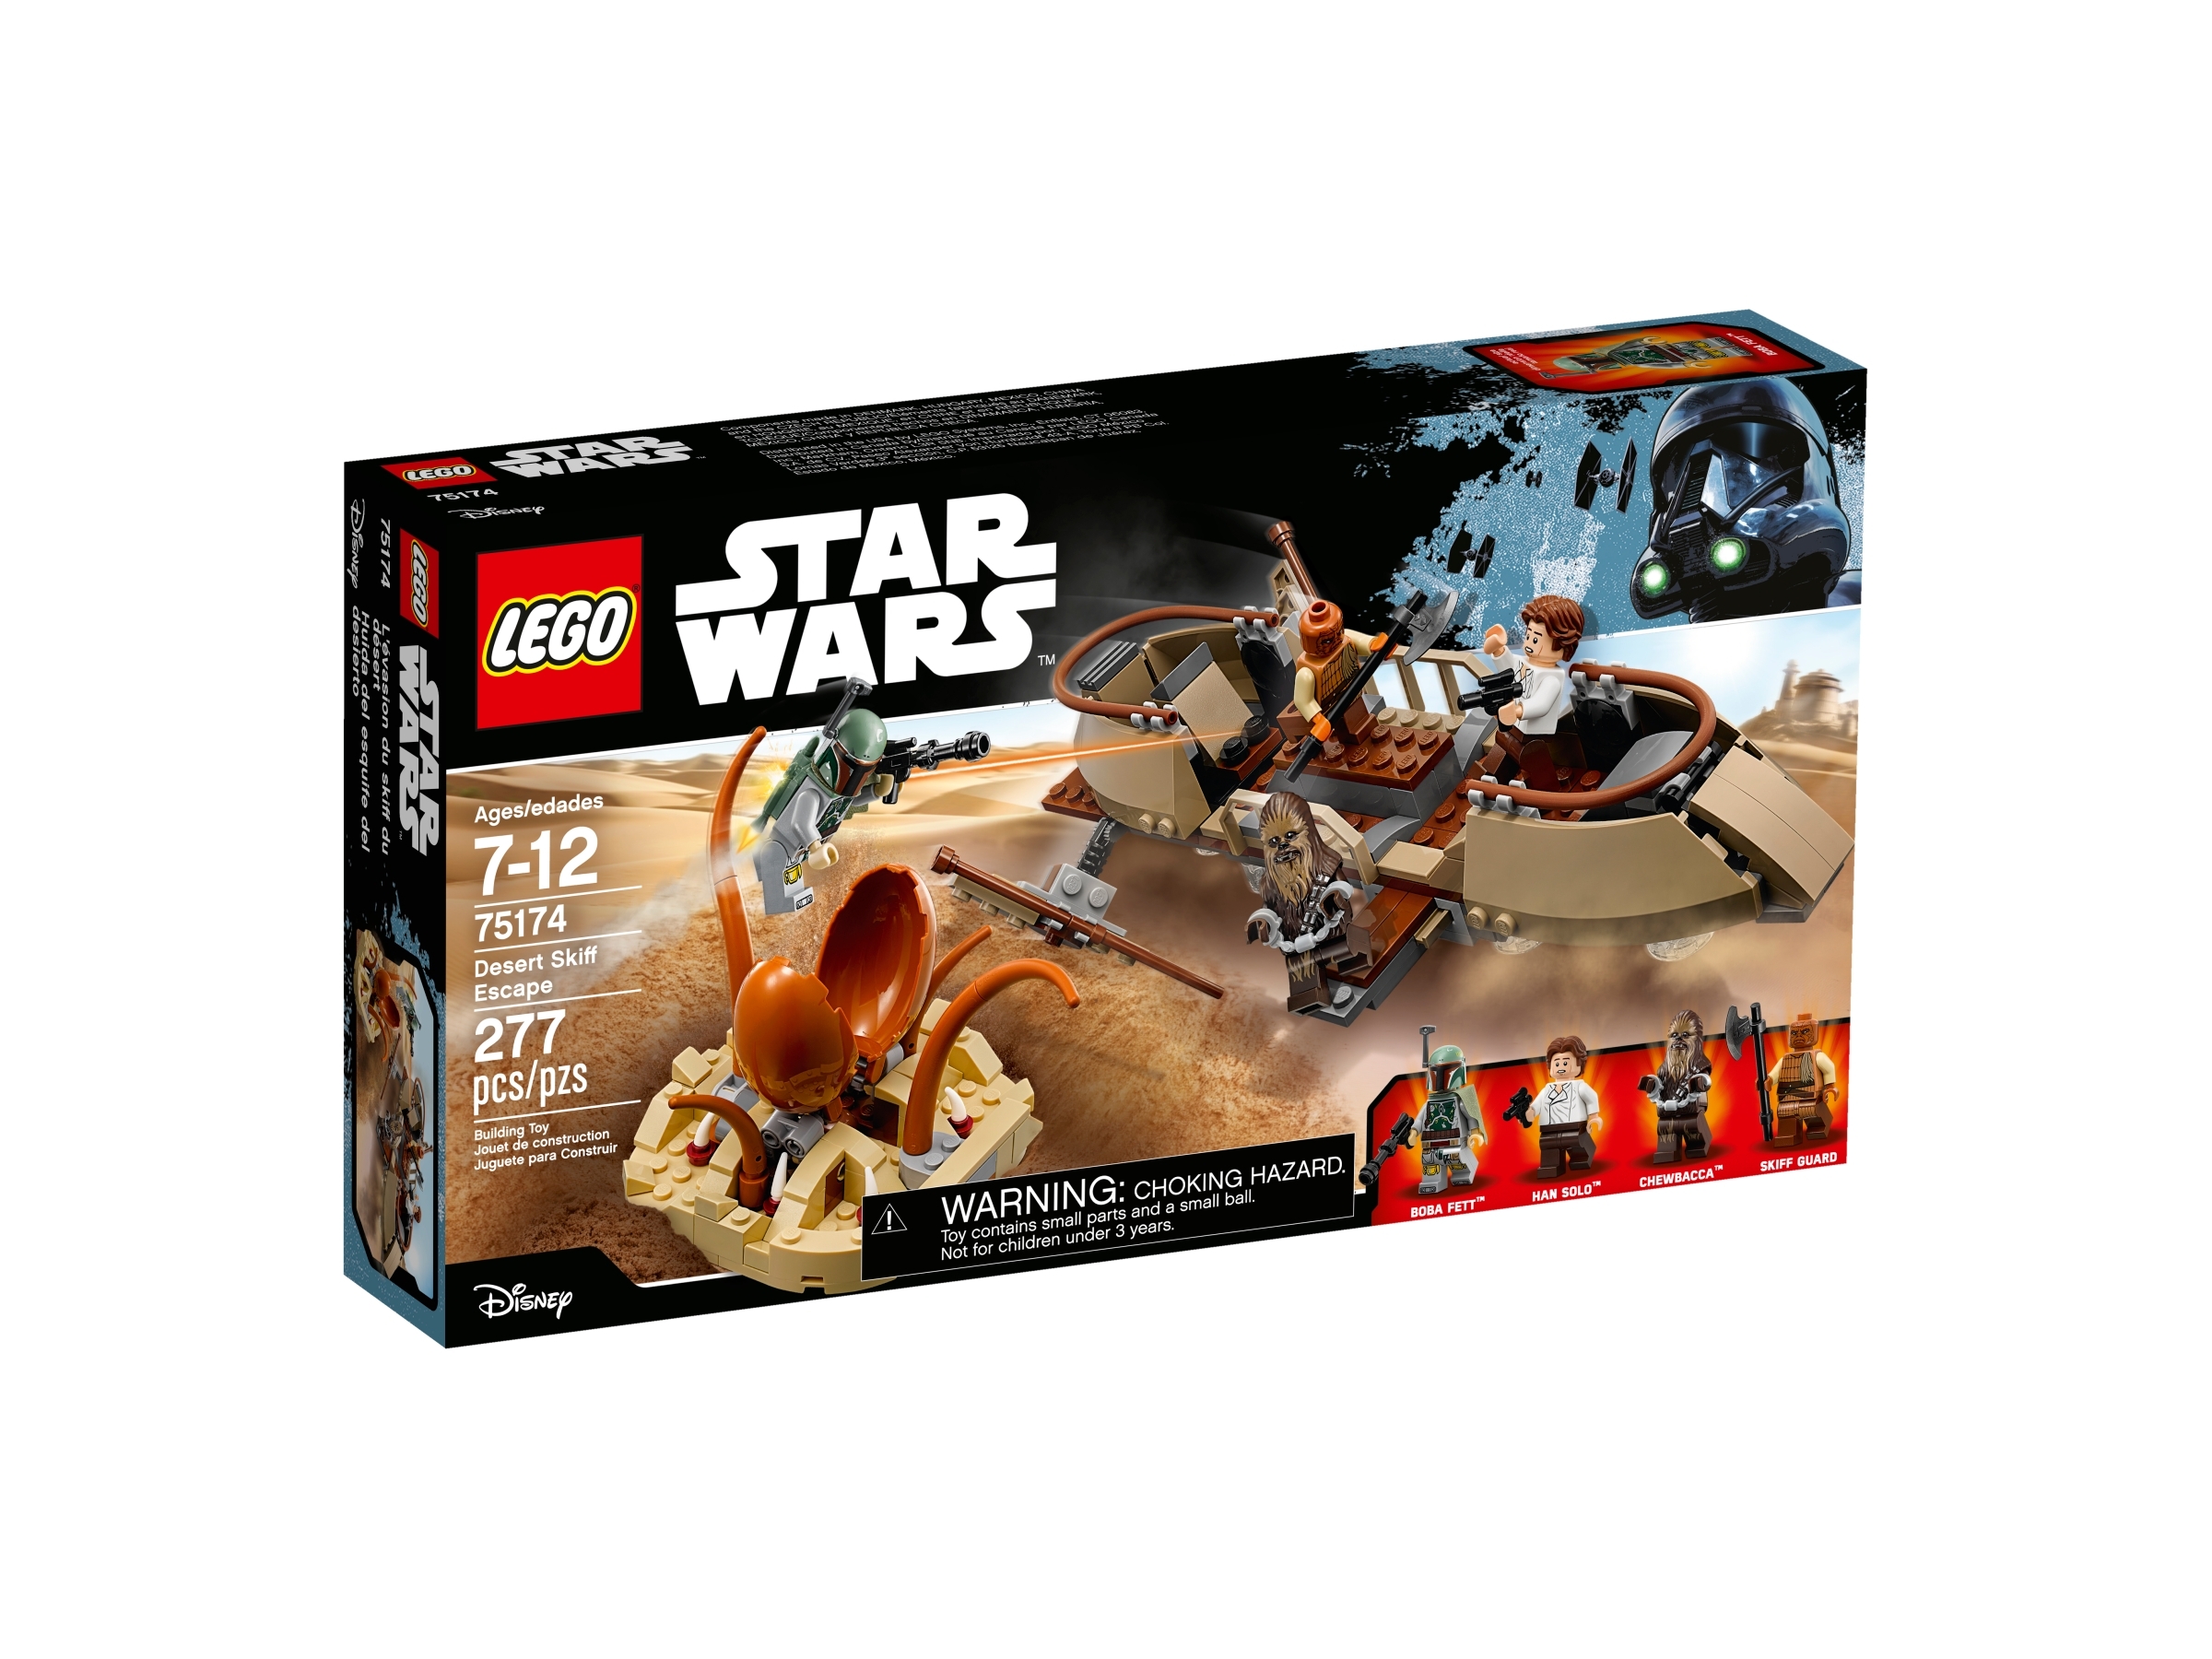 Lego Star Wars 75174 Desert Skiff Escape NEU & OVP Selten EOL 